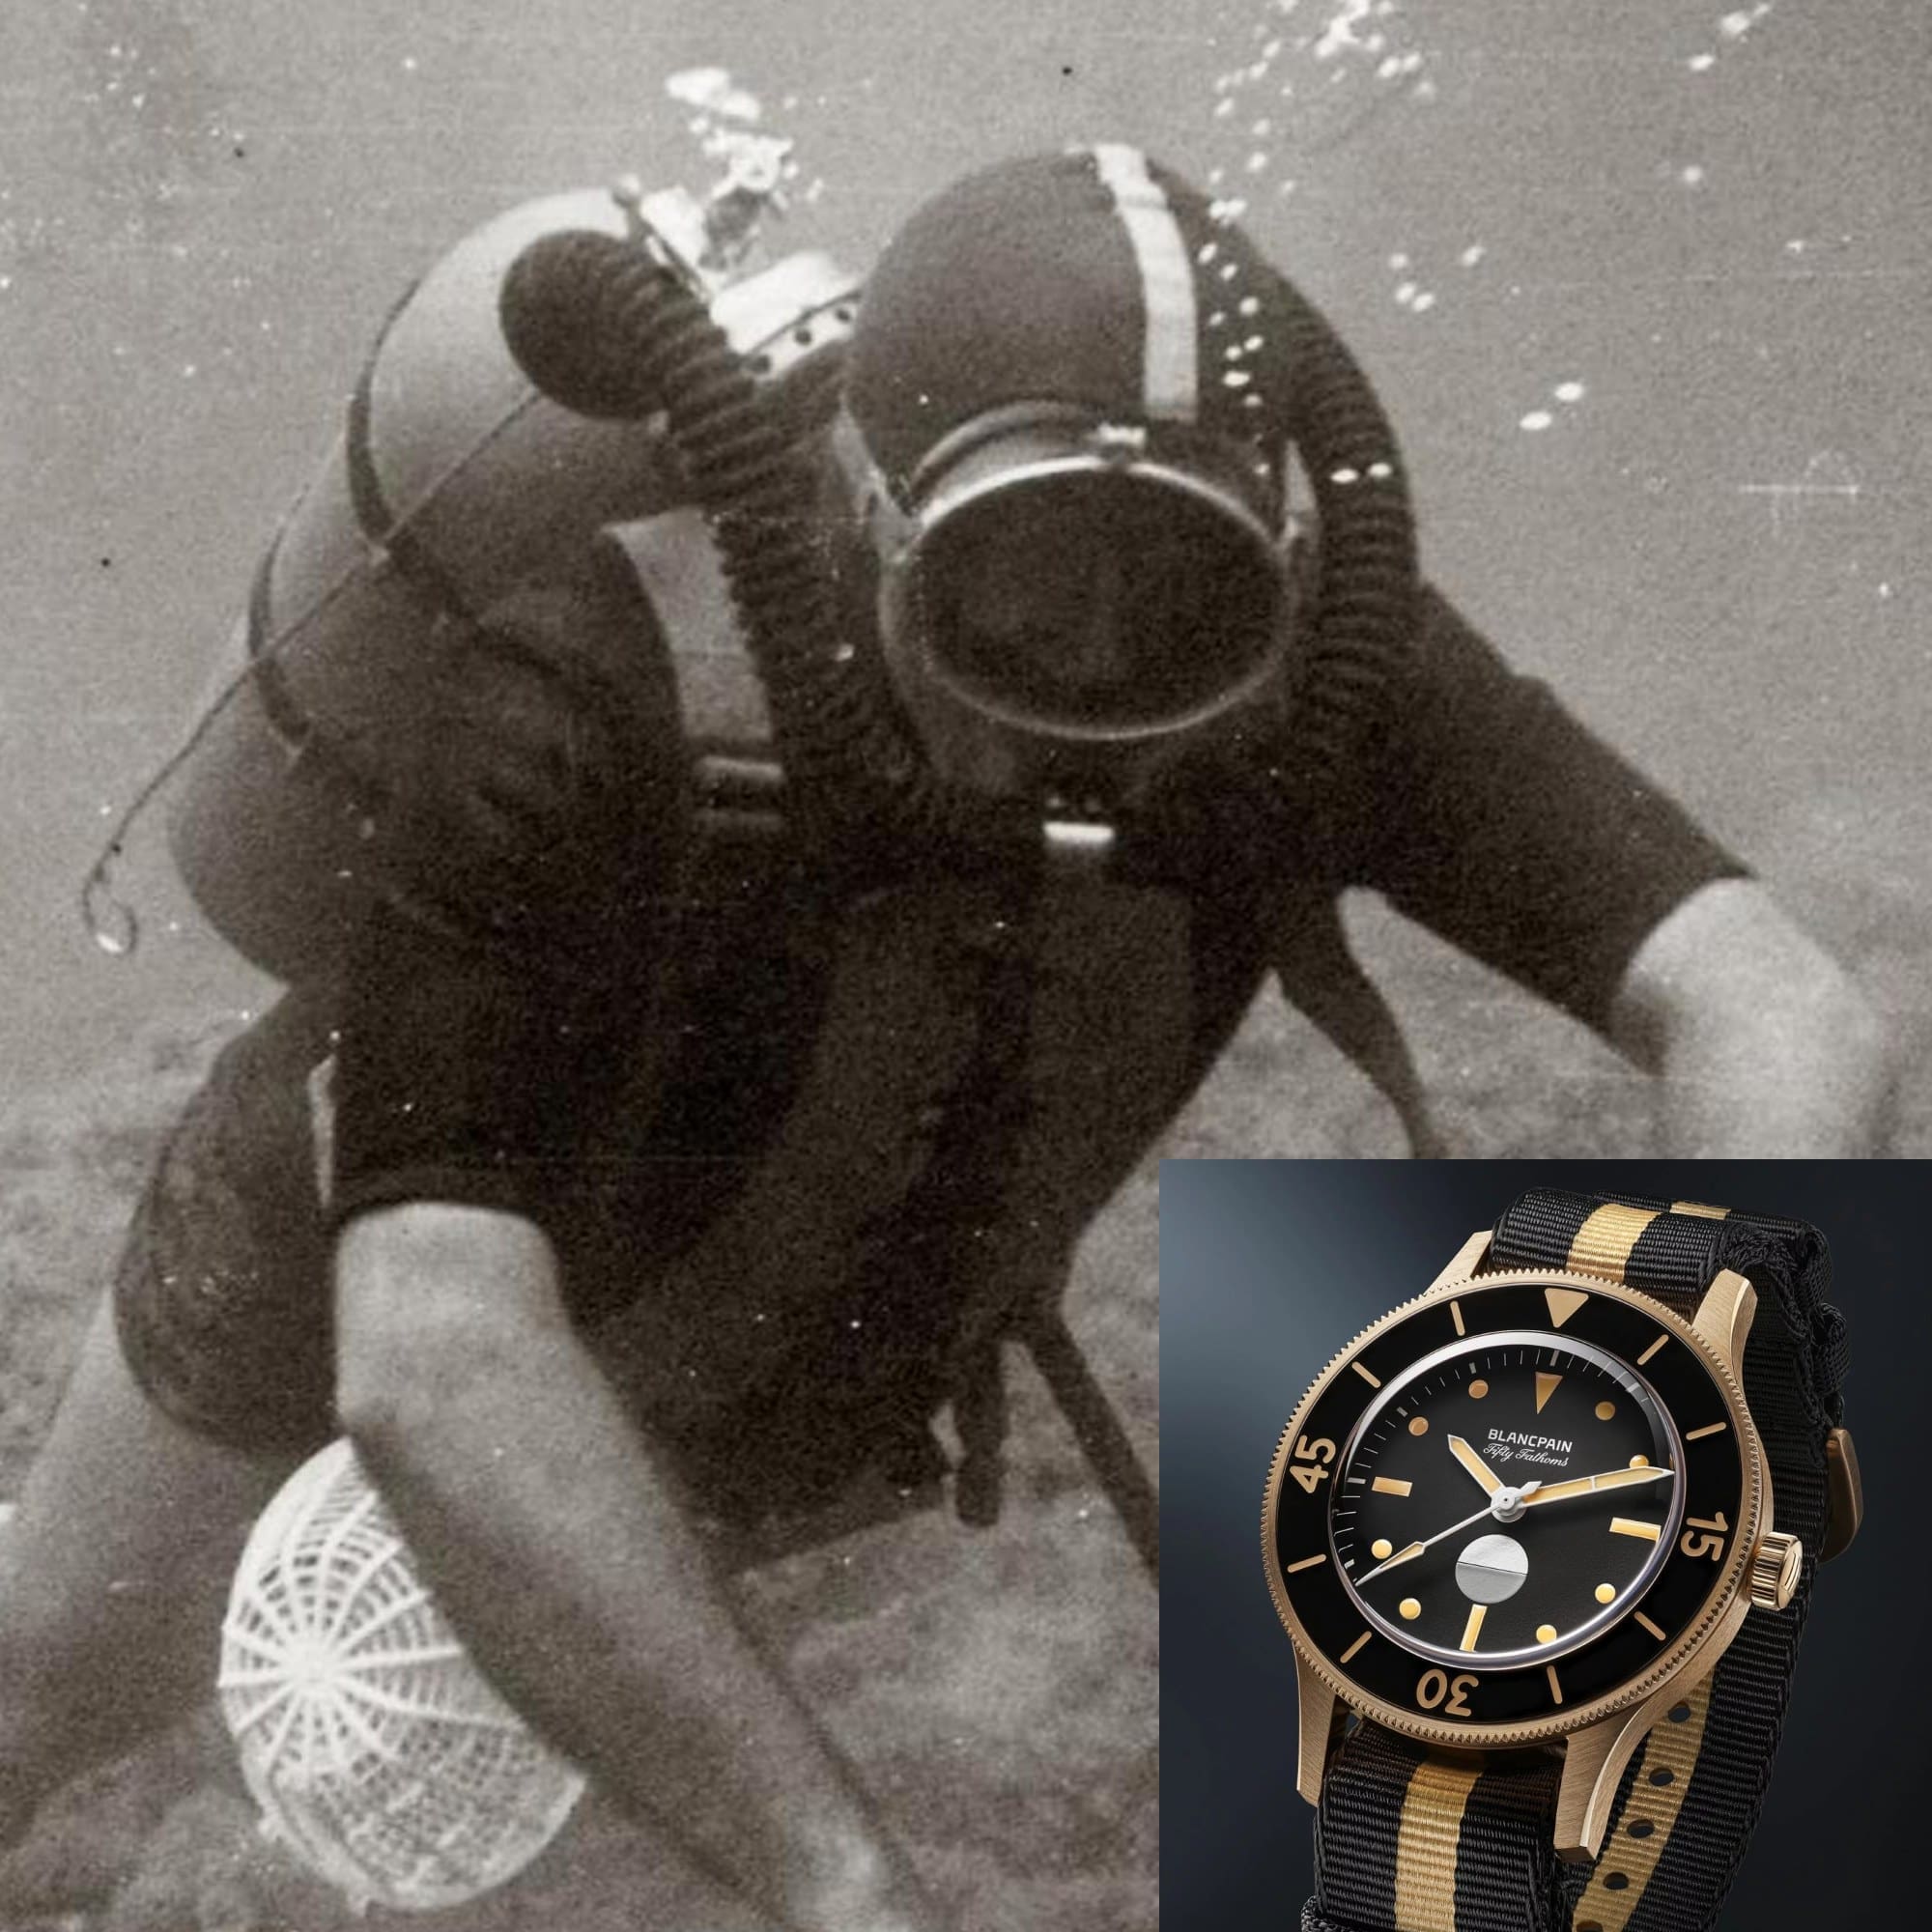 Why Blancpain’s epic marketing flex didn’t involve a single watch